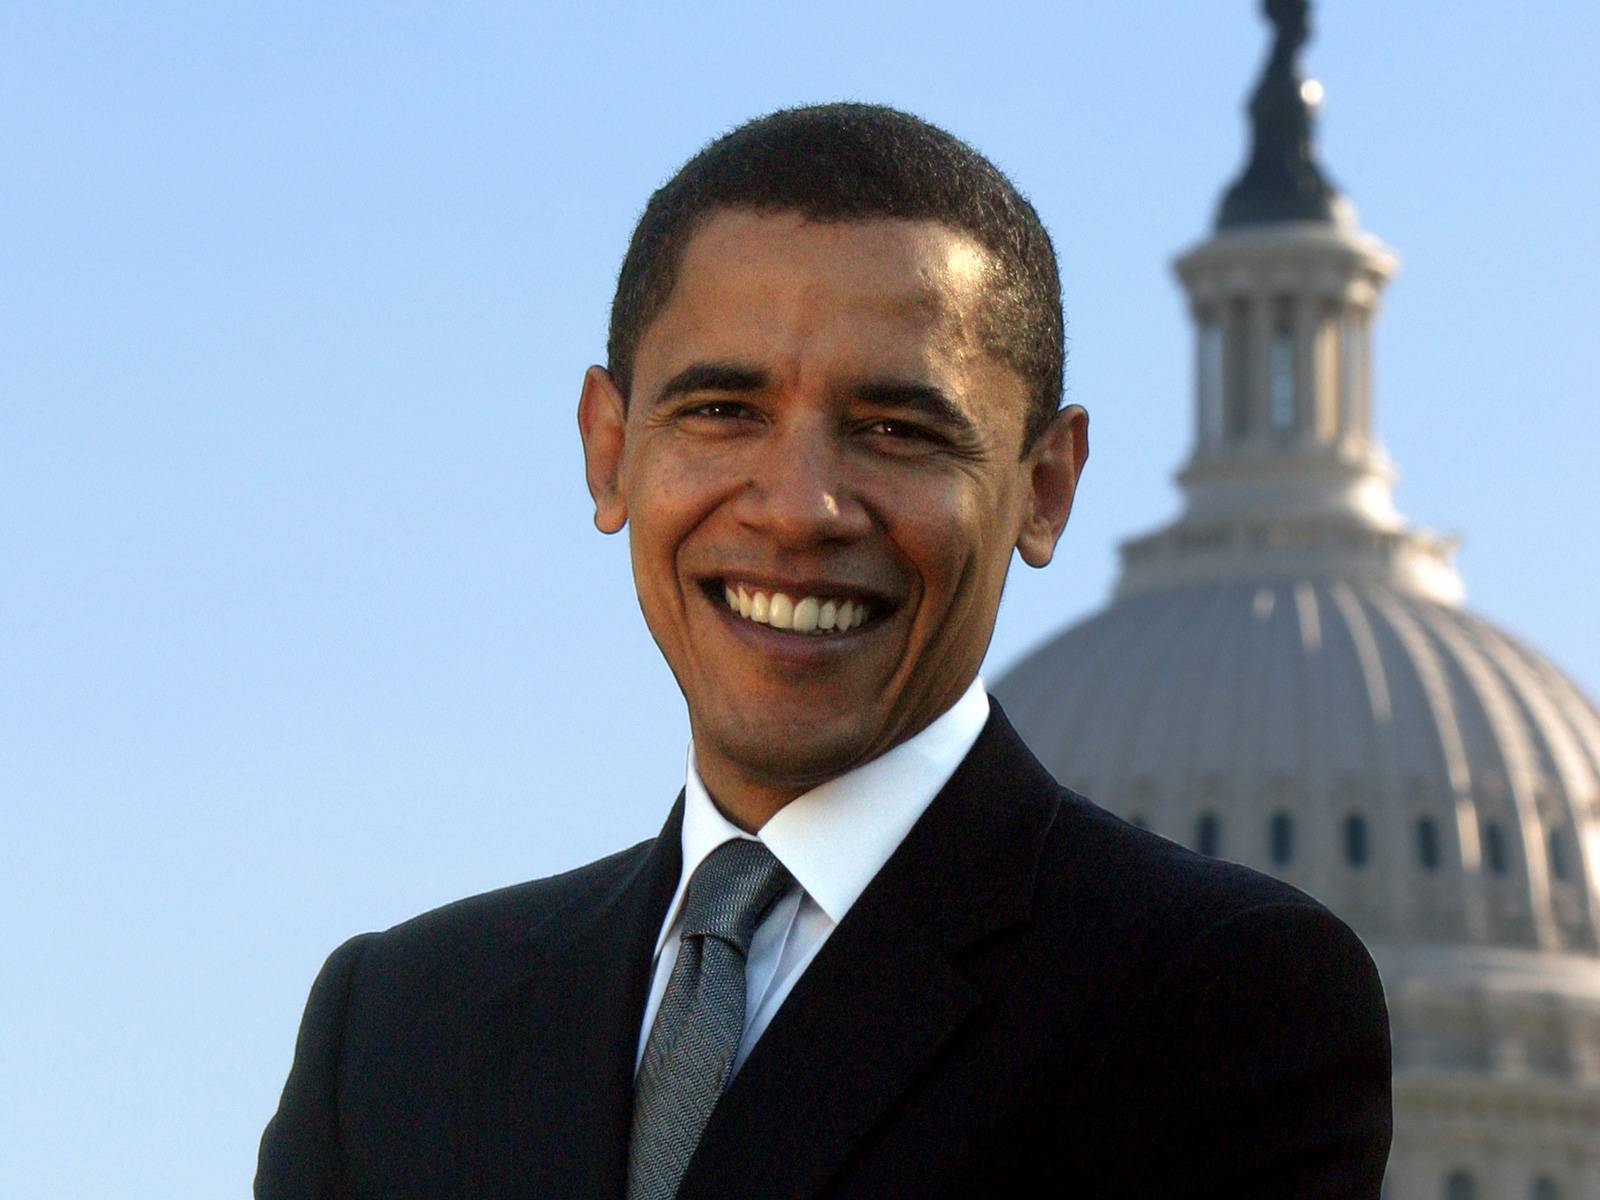 Barack Obama smile wallpaper